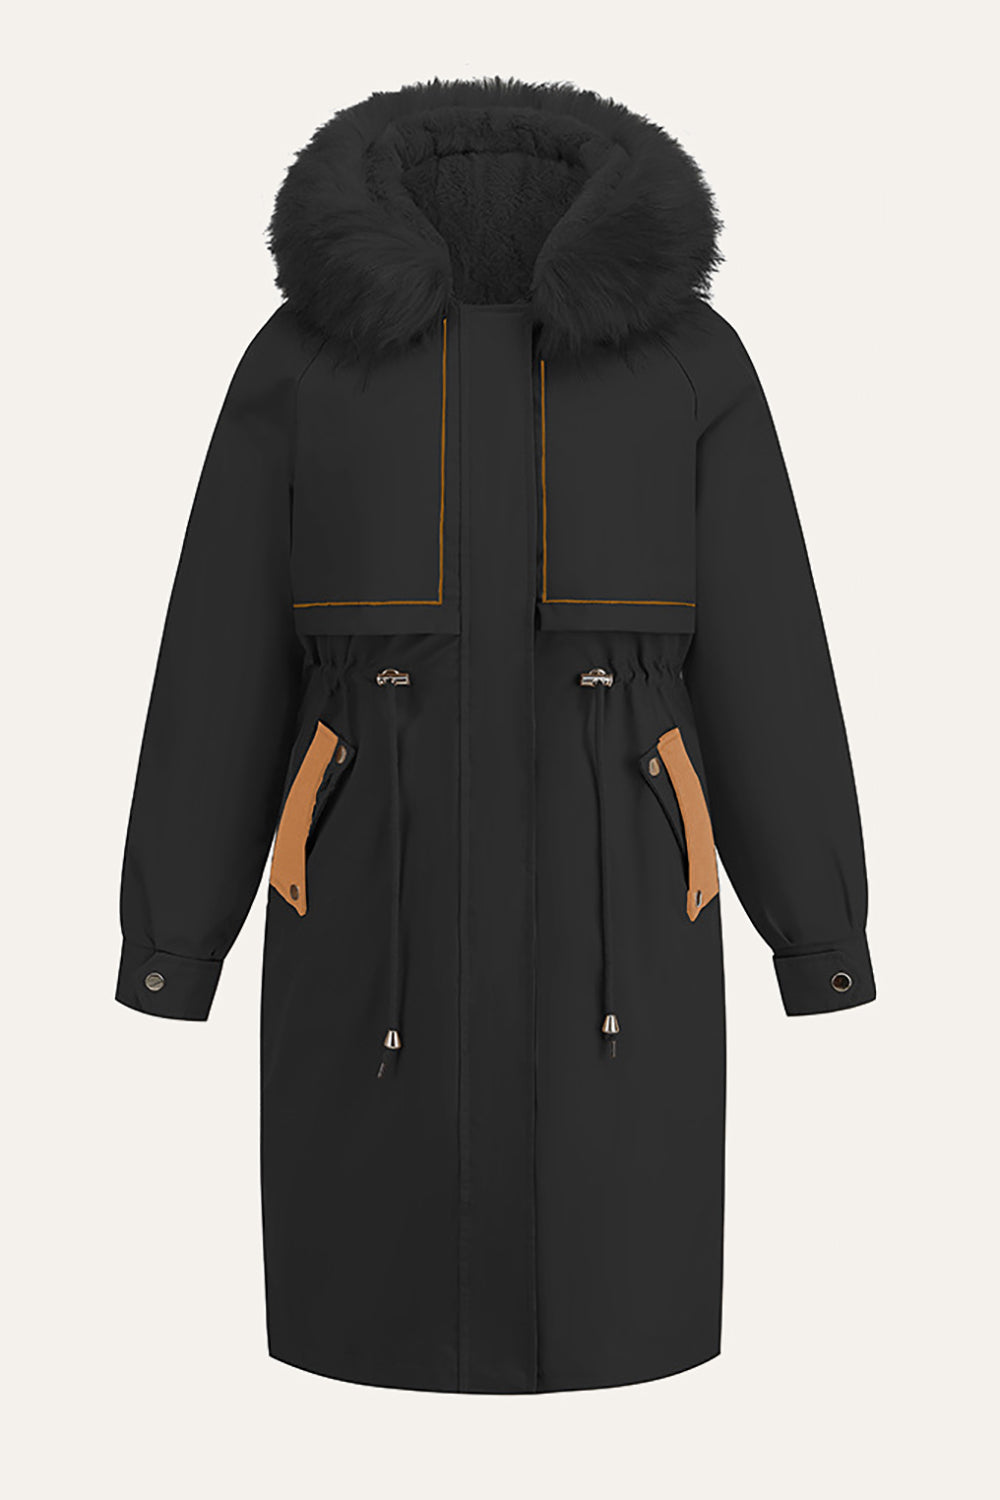 Black Winter Parka Jacket with Removable Liner